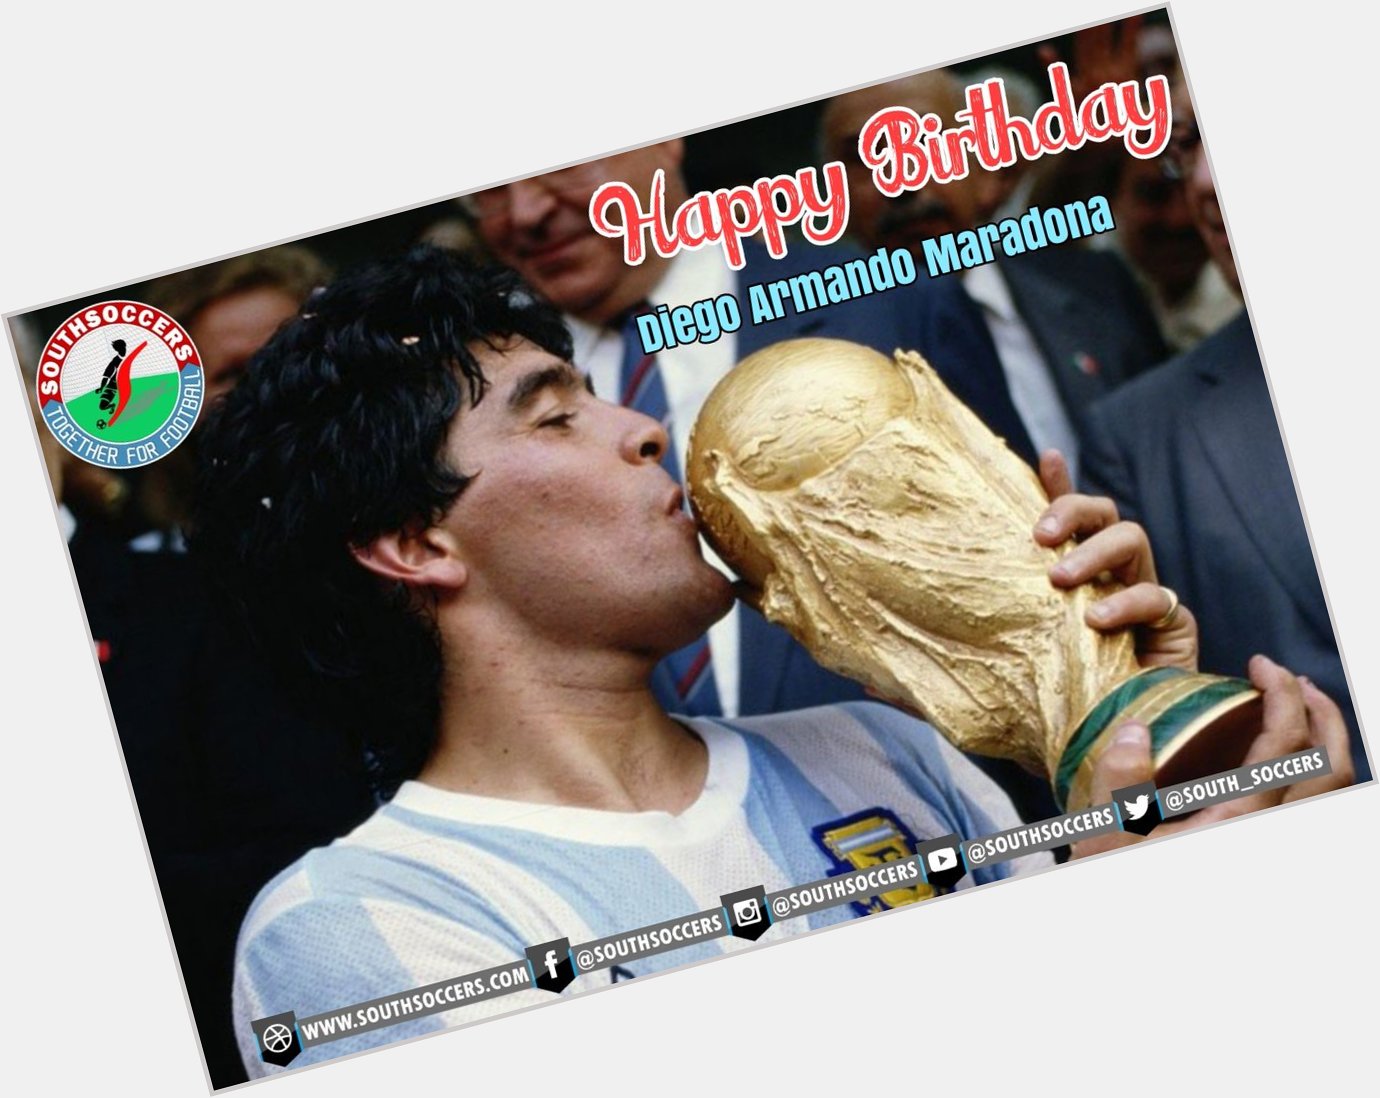 SouthSoccers wishes a very Happy Birthday to the legend Diego Maradona.   